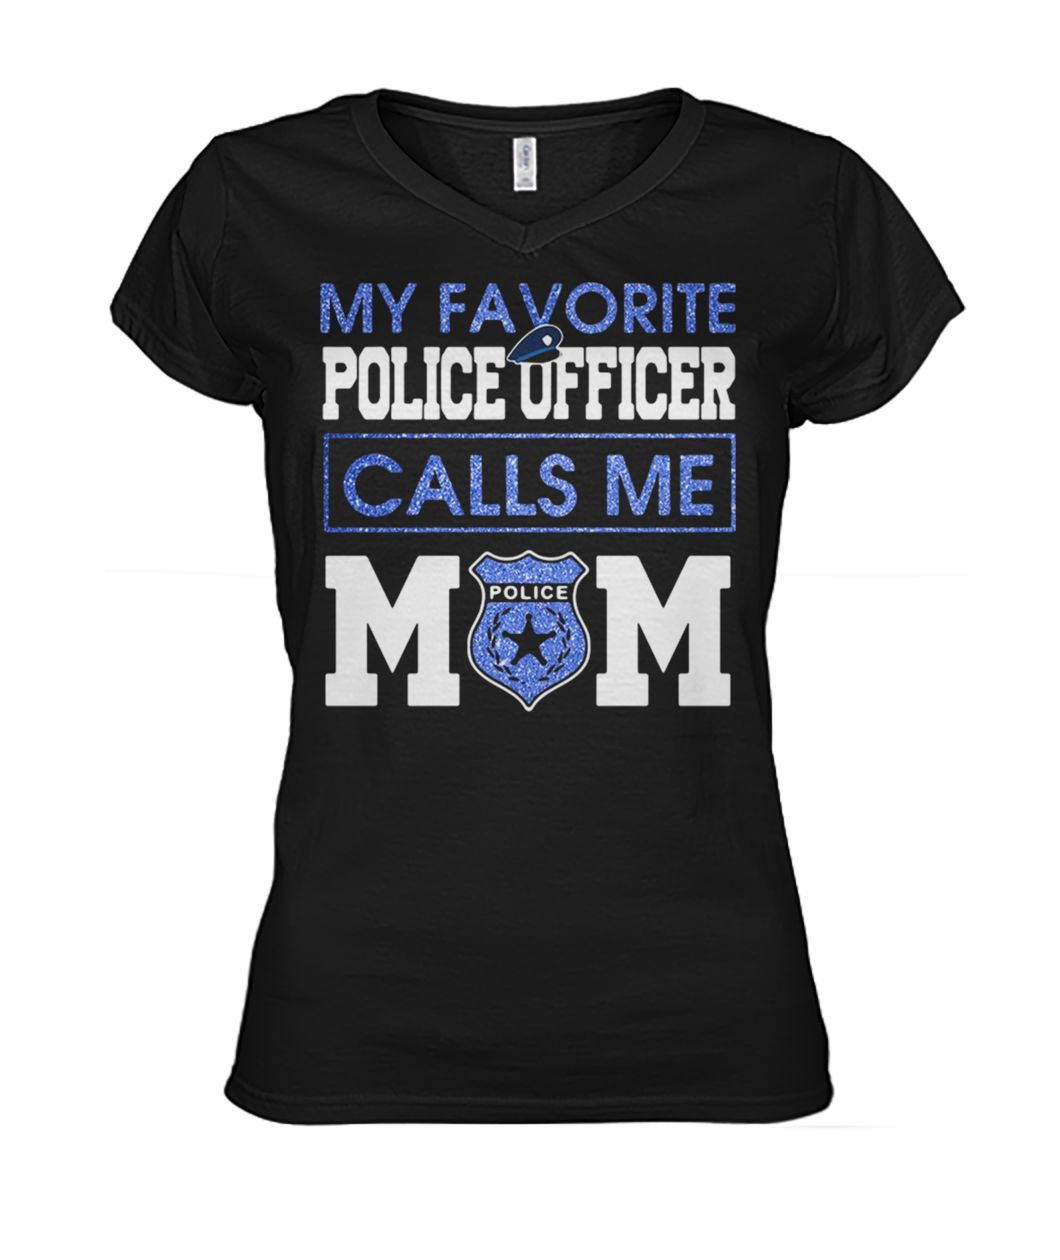 My favorite police officer calls me mom women's v-neck